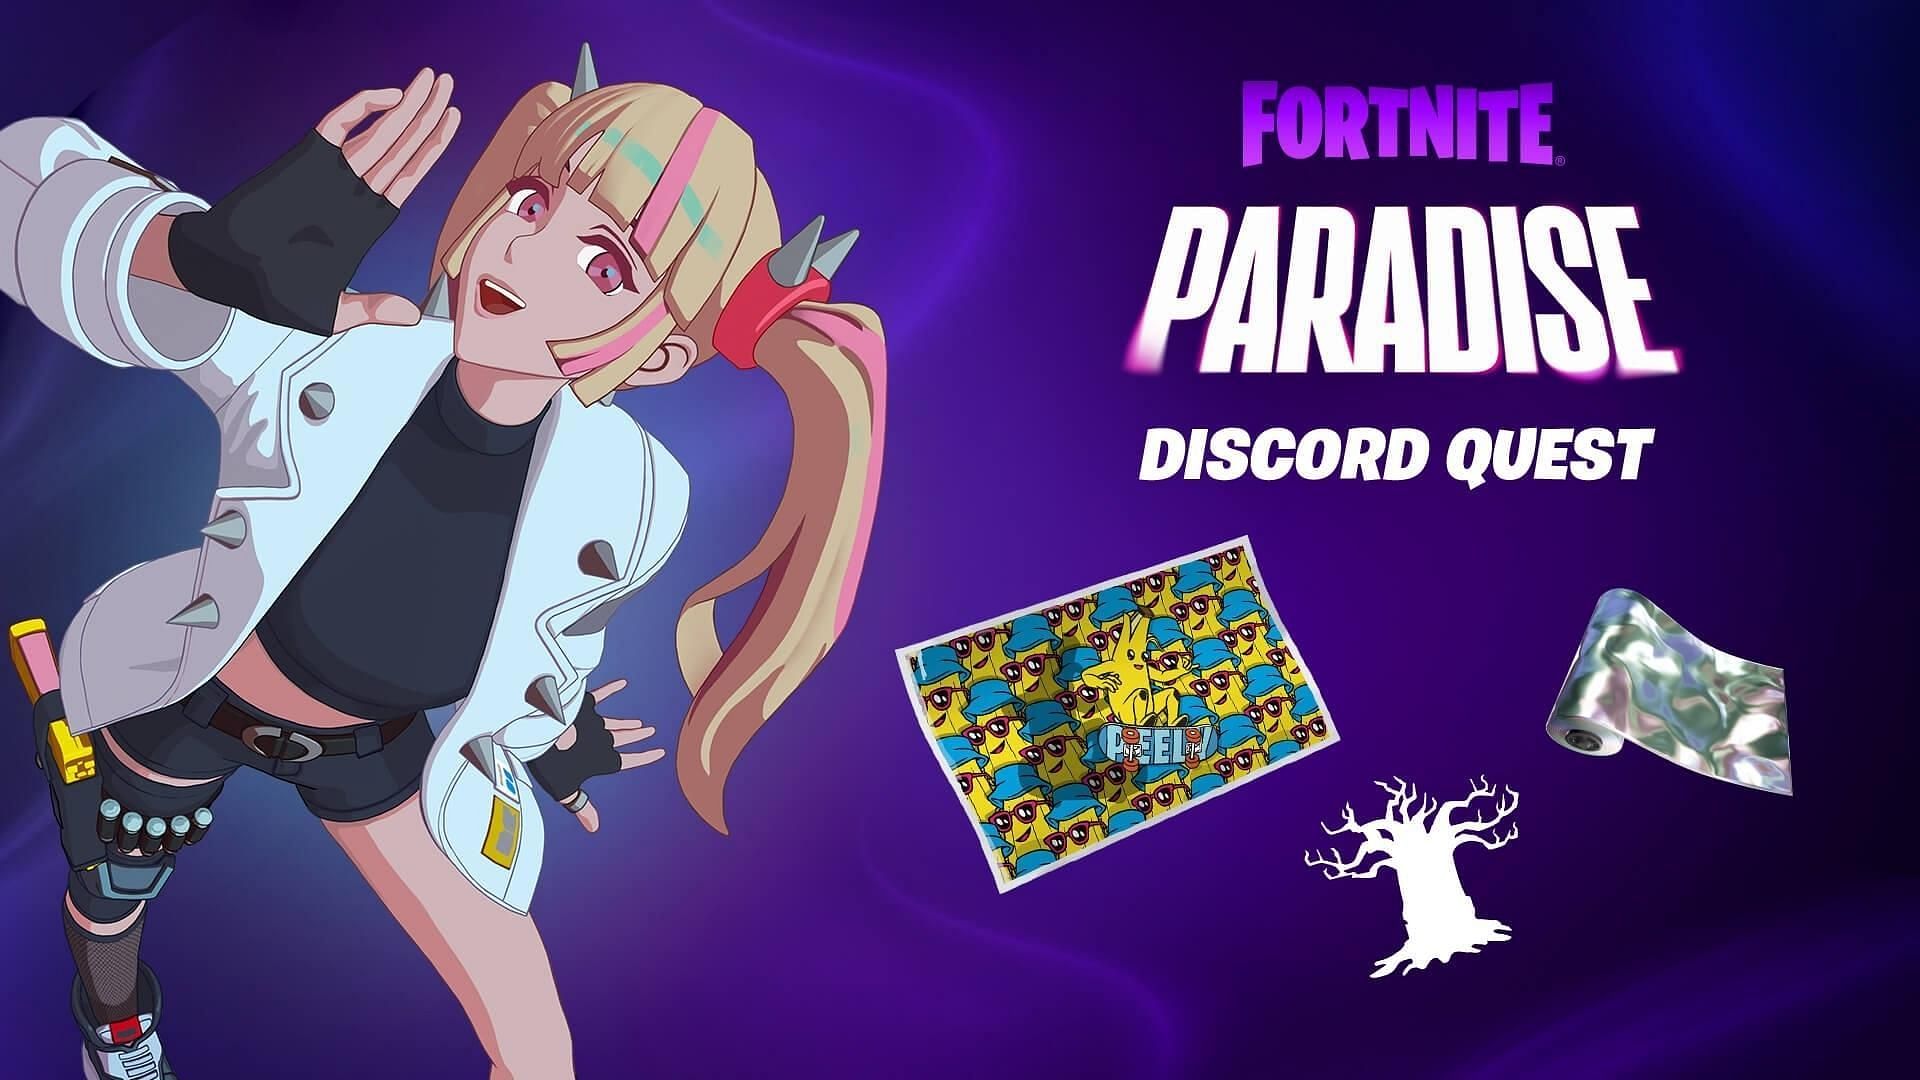 Fortnite Paradise Discord Quest art